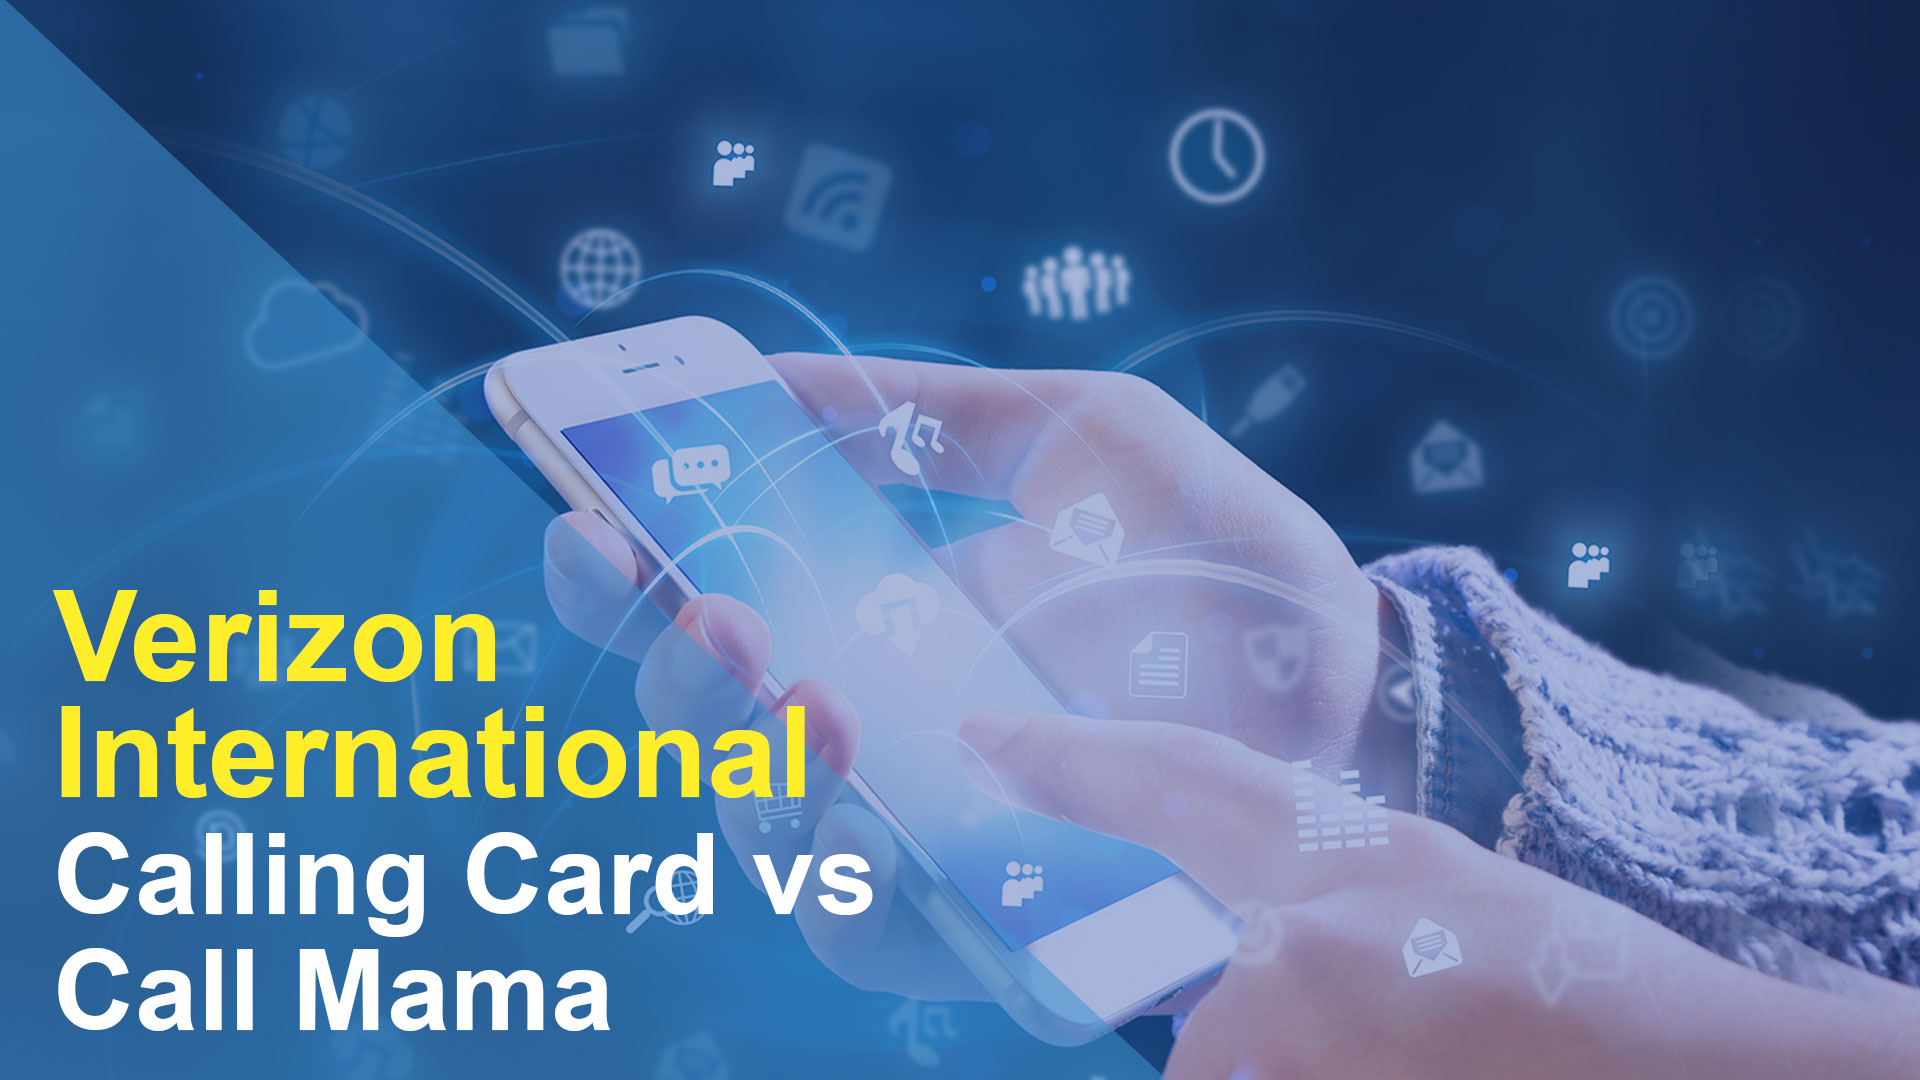 Verizon International Calling Card vs. Call Mama